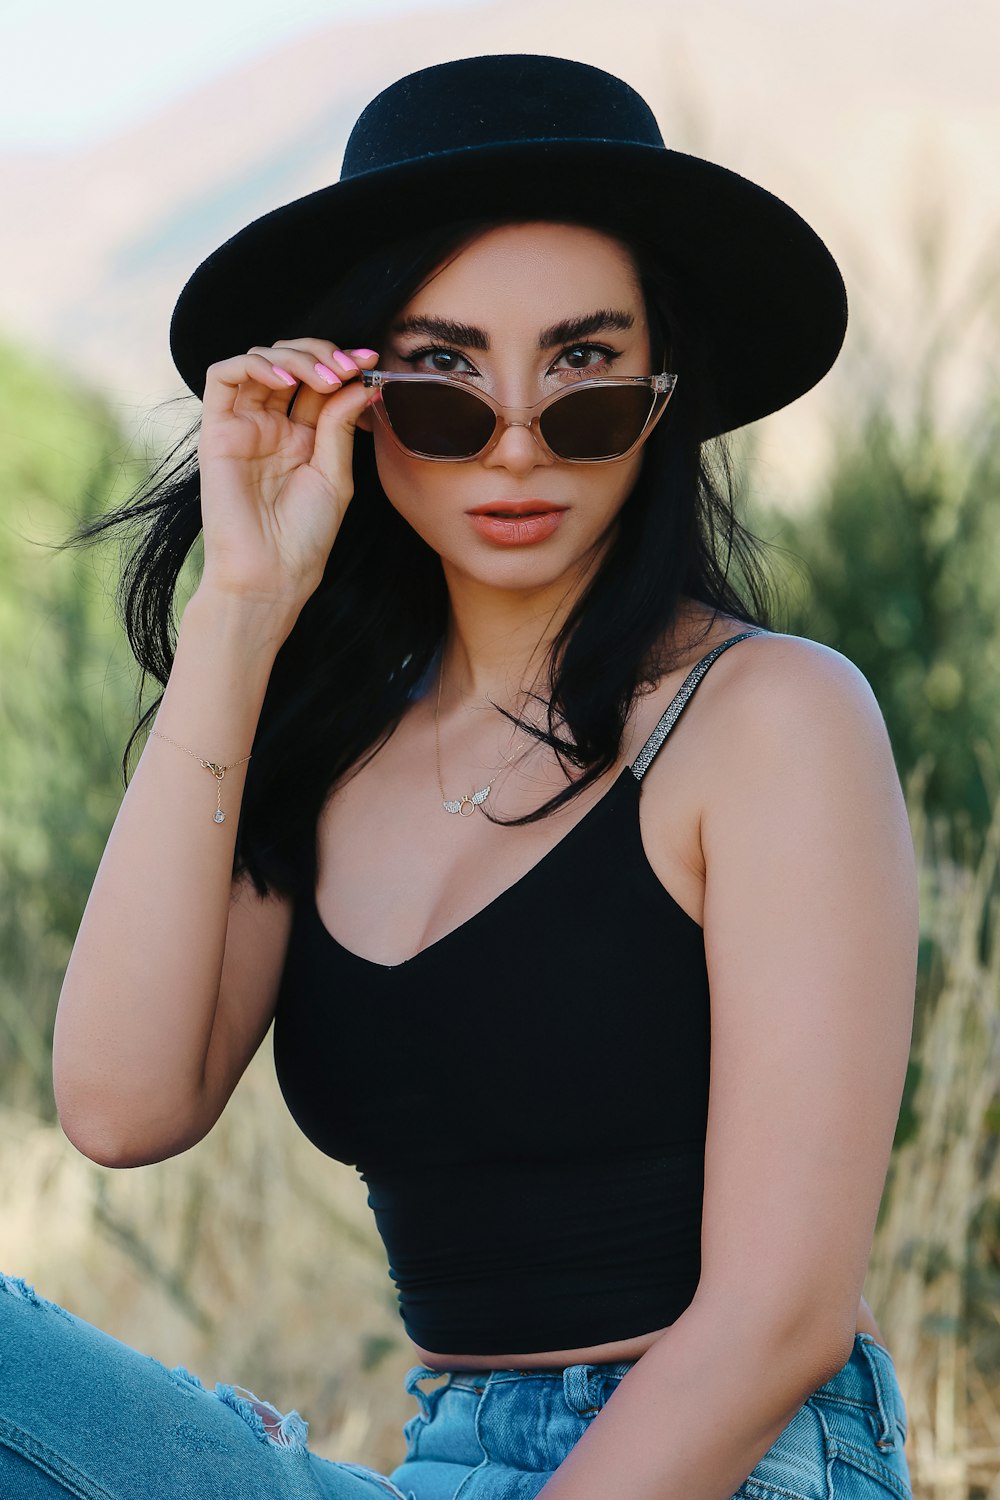 woman in black tank top wearing black sunglasses